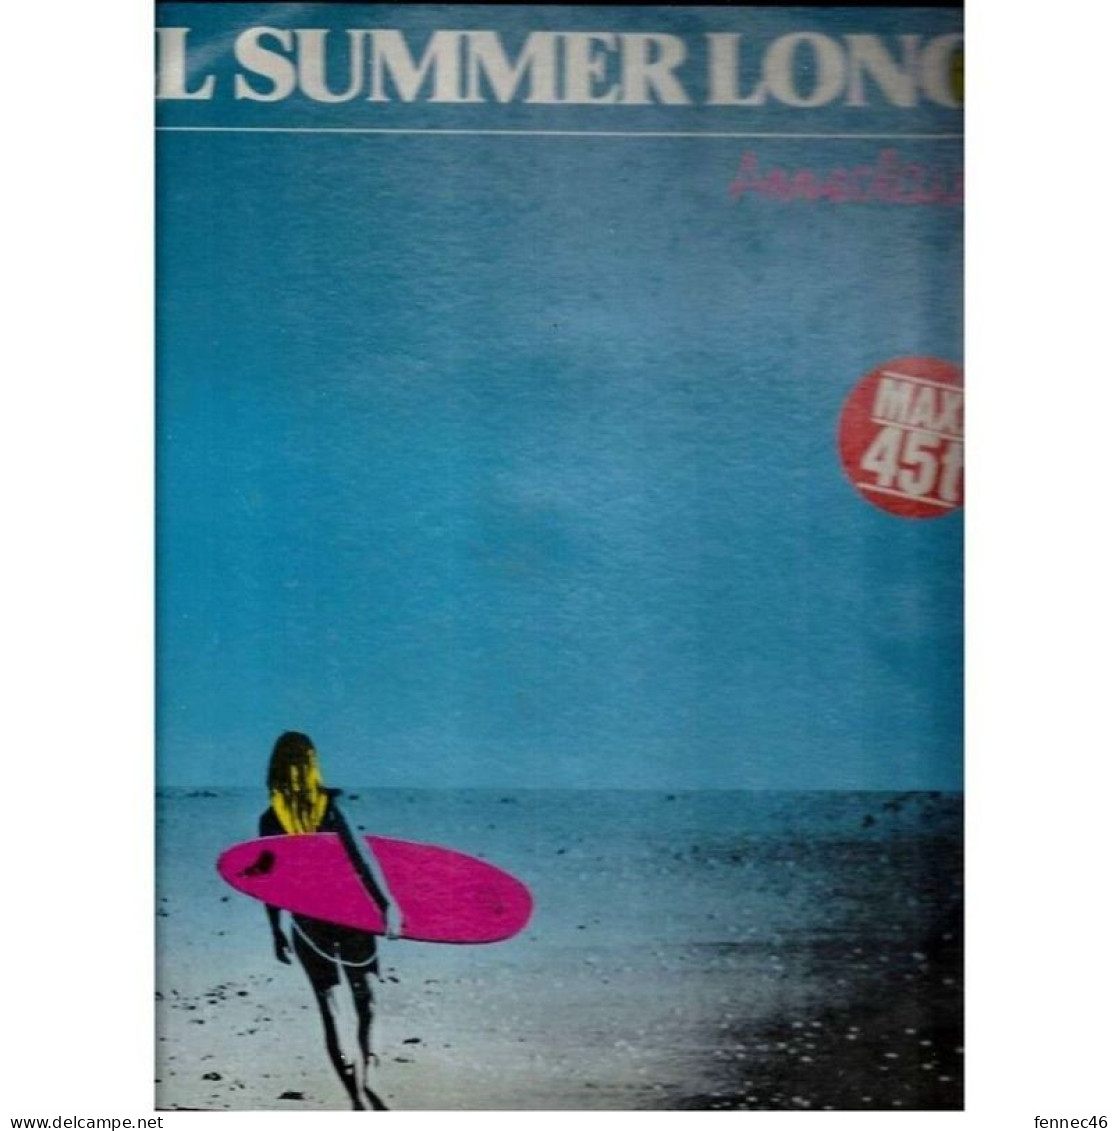 Vinyle Maxi 45T - Anne Claire All Summer Long - 45 Rpm - Maxi-Single